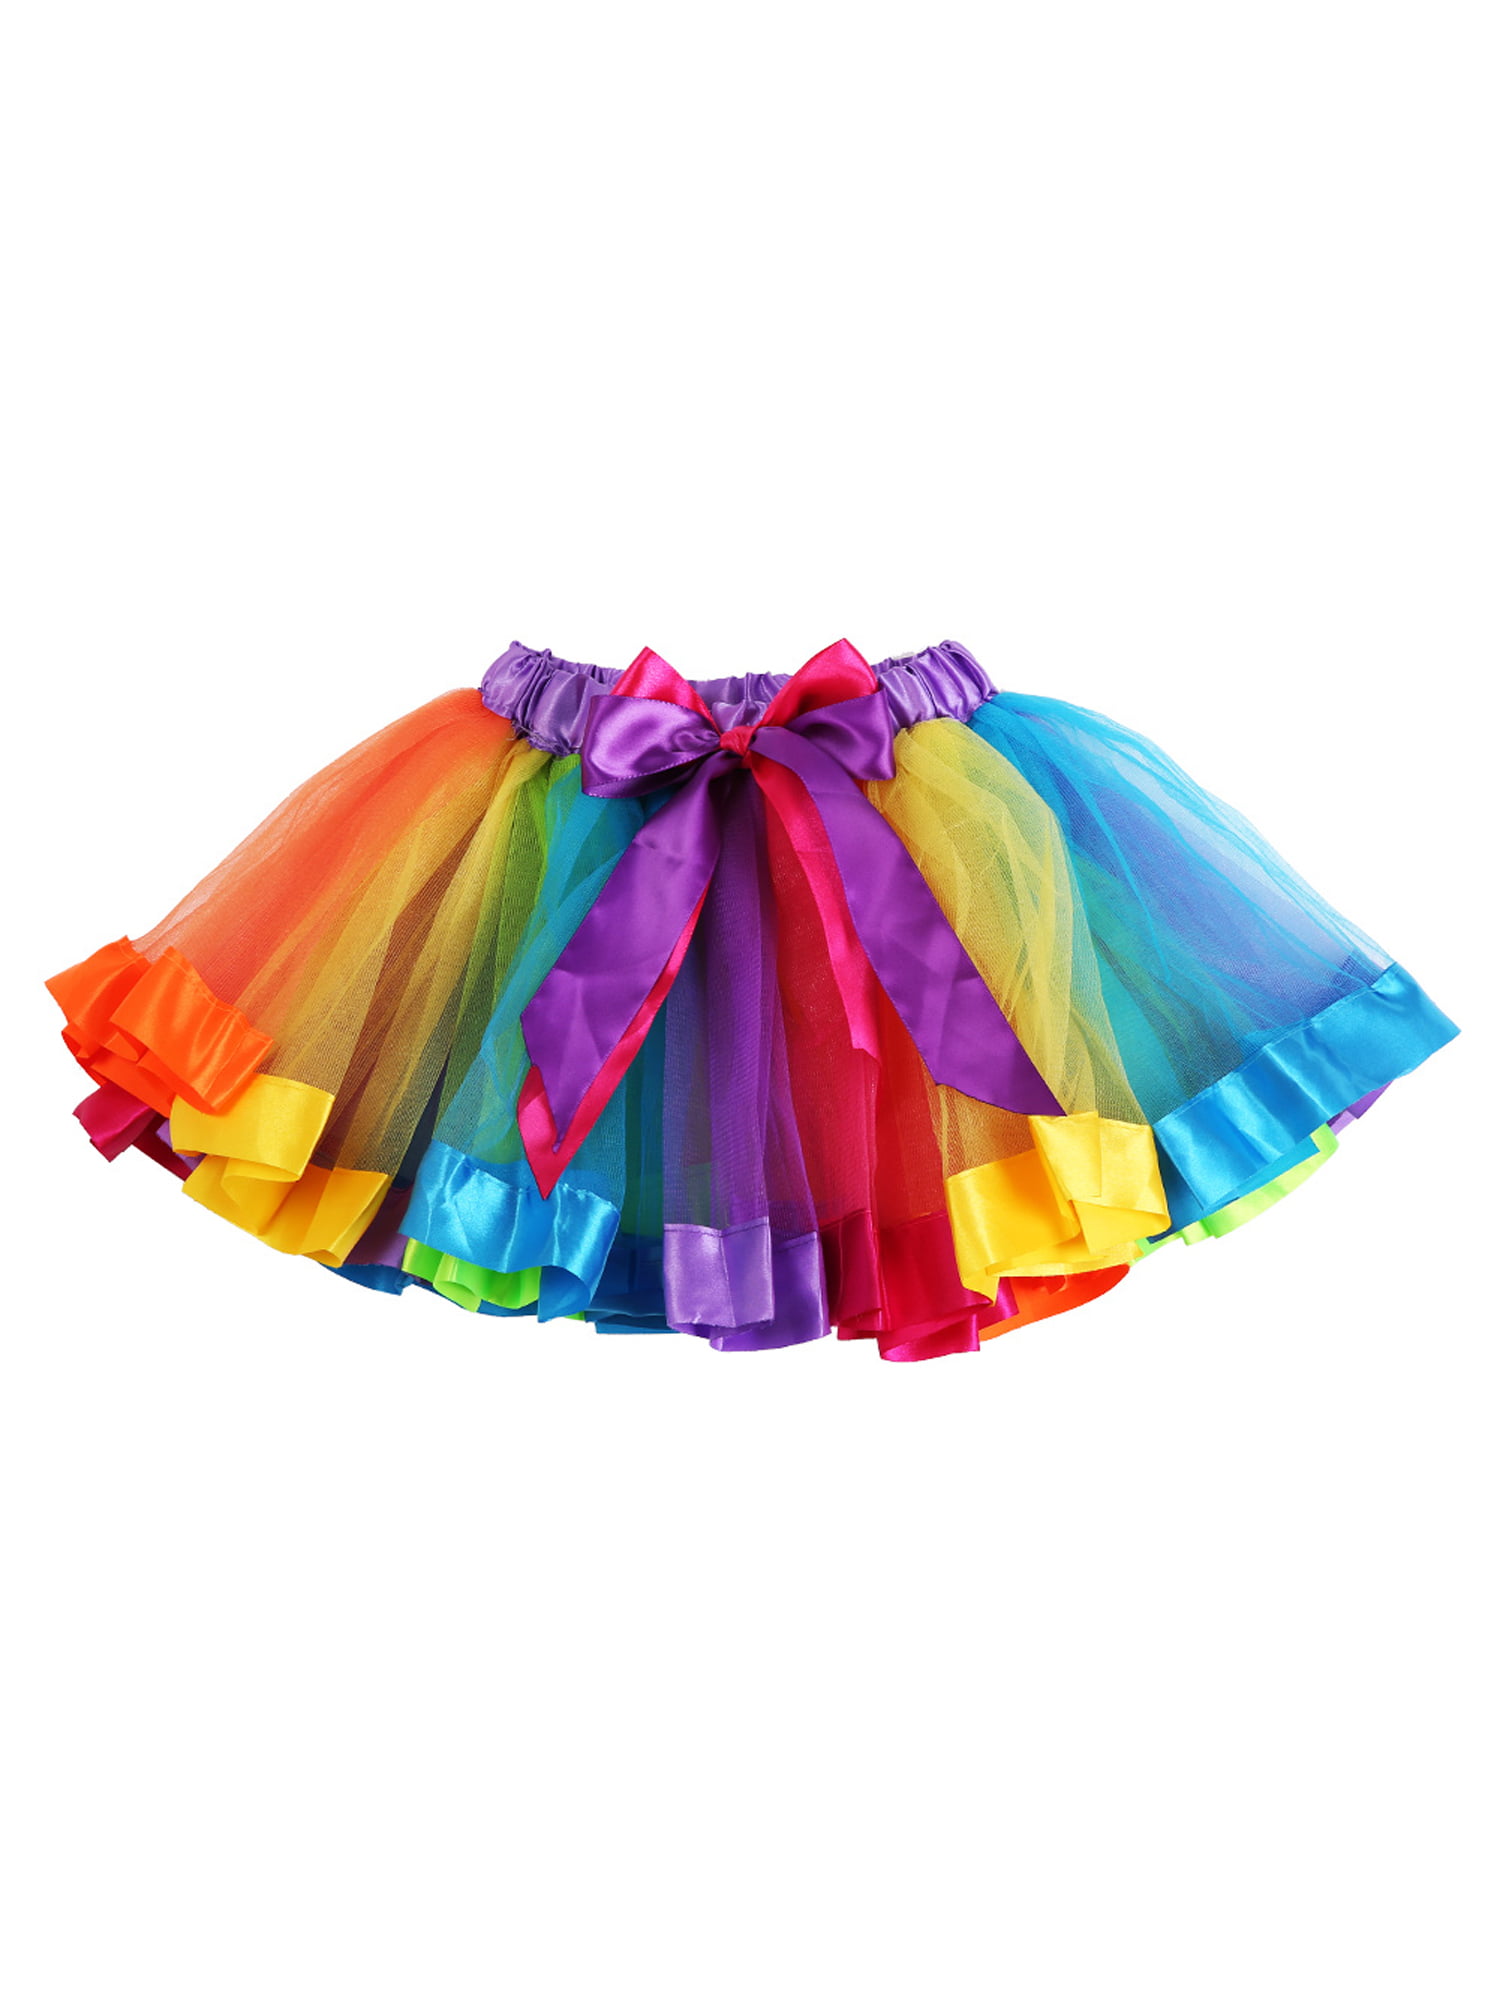 Kids Baby Girls Party Fancy Tutu Fairy Skirt Dancing Costumes Dress Up